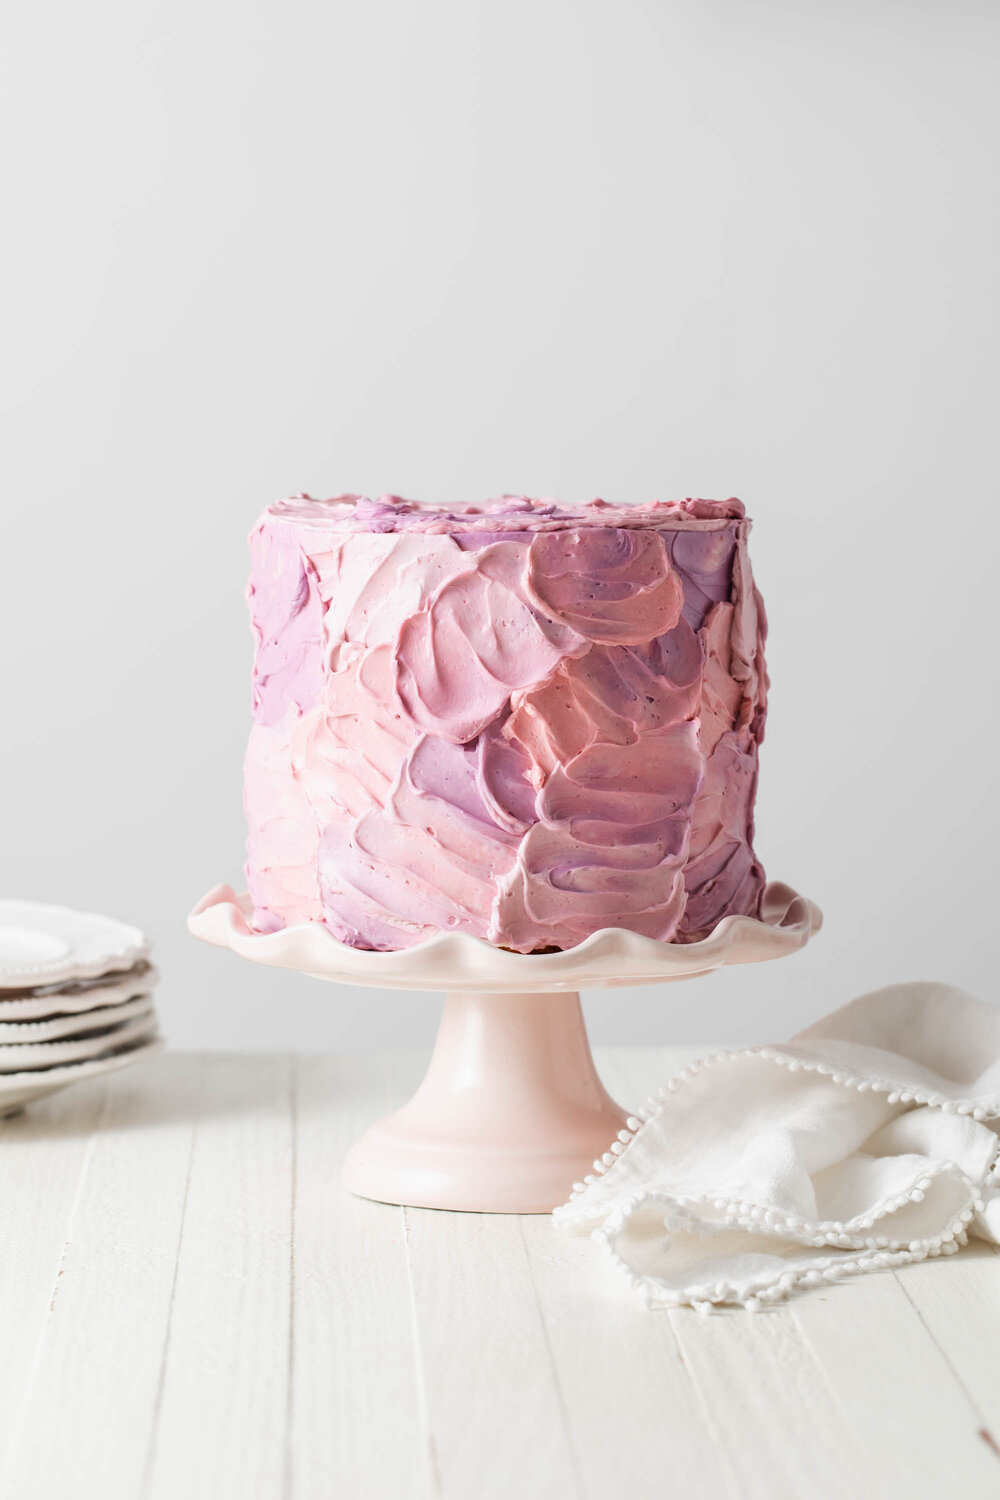 Blackberry Lavender Cake with Swiss meringue buttercream